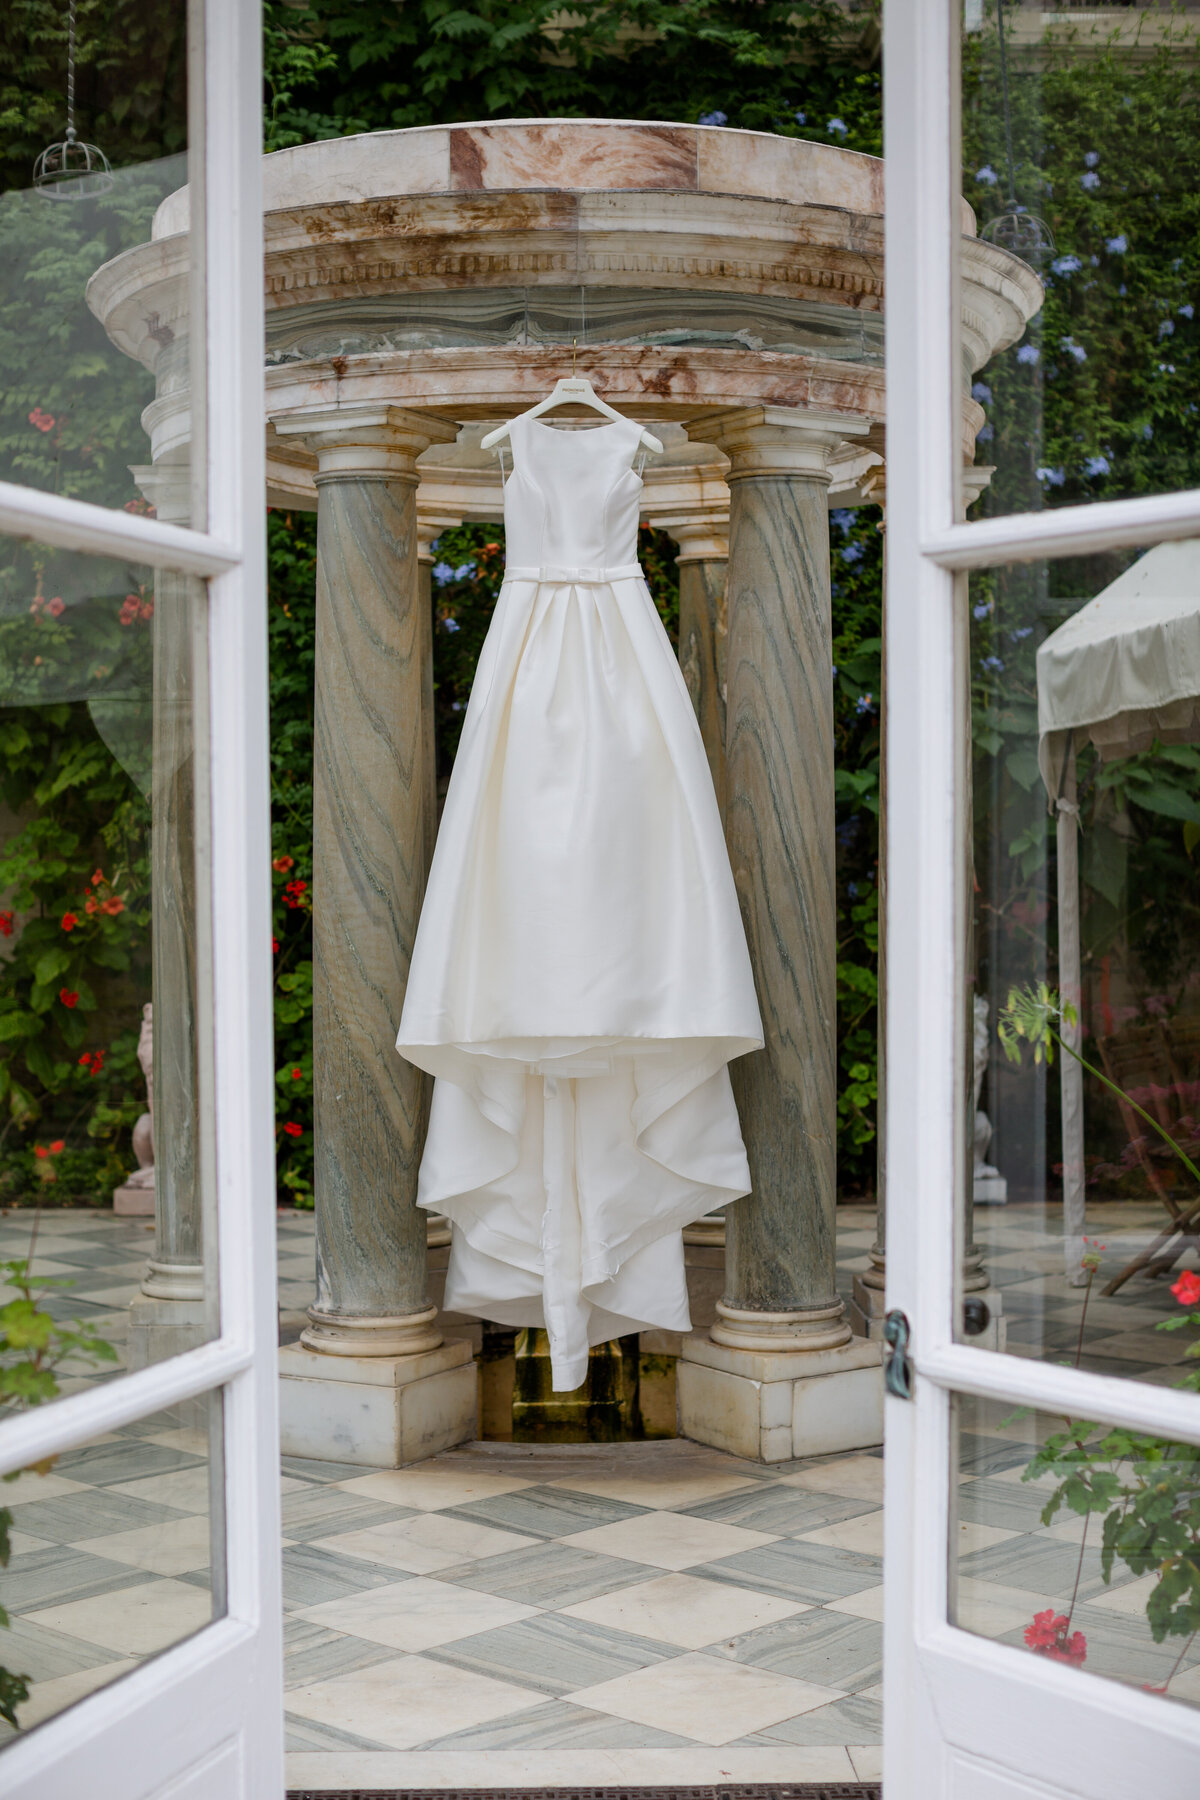 A Pronovias Wedding Dress hanging in a doorway